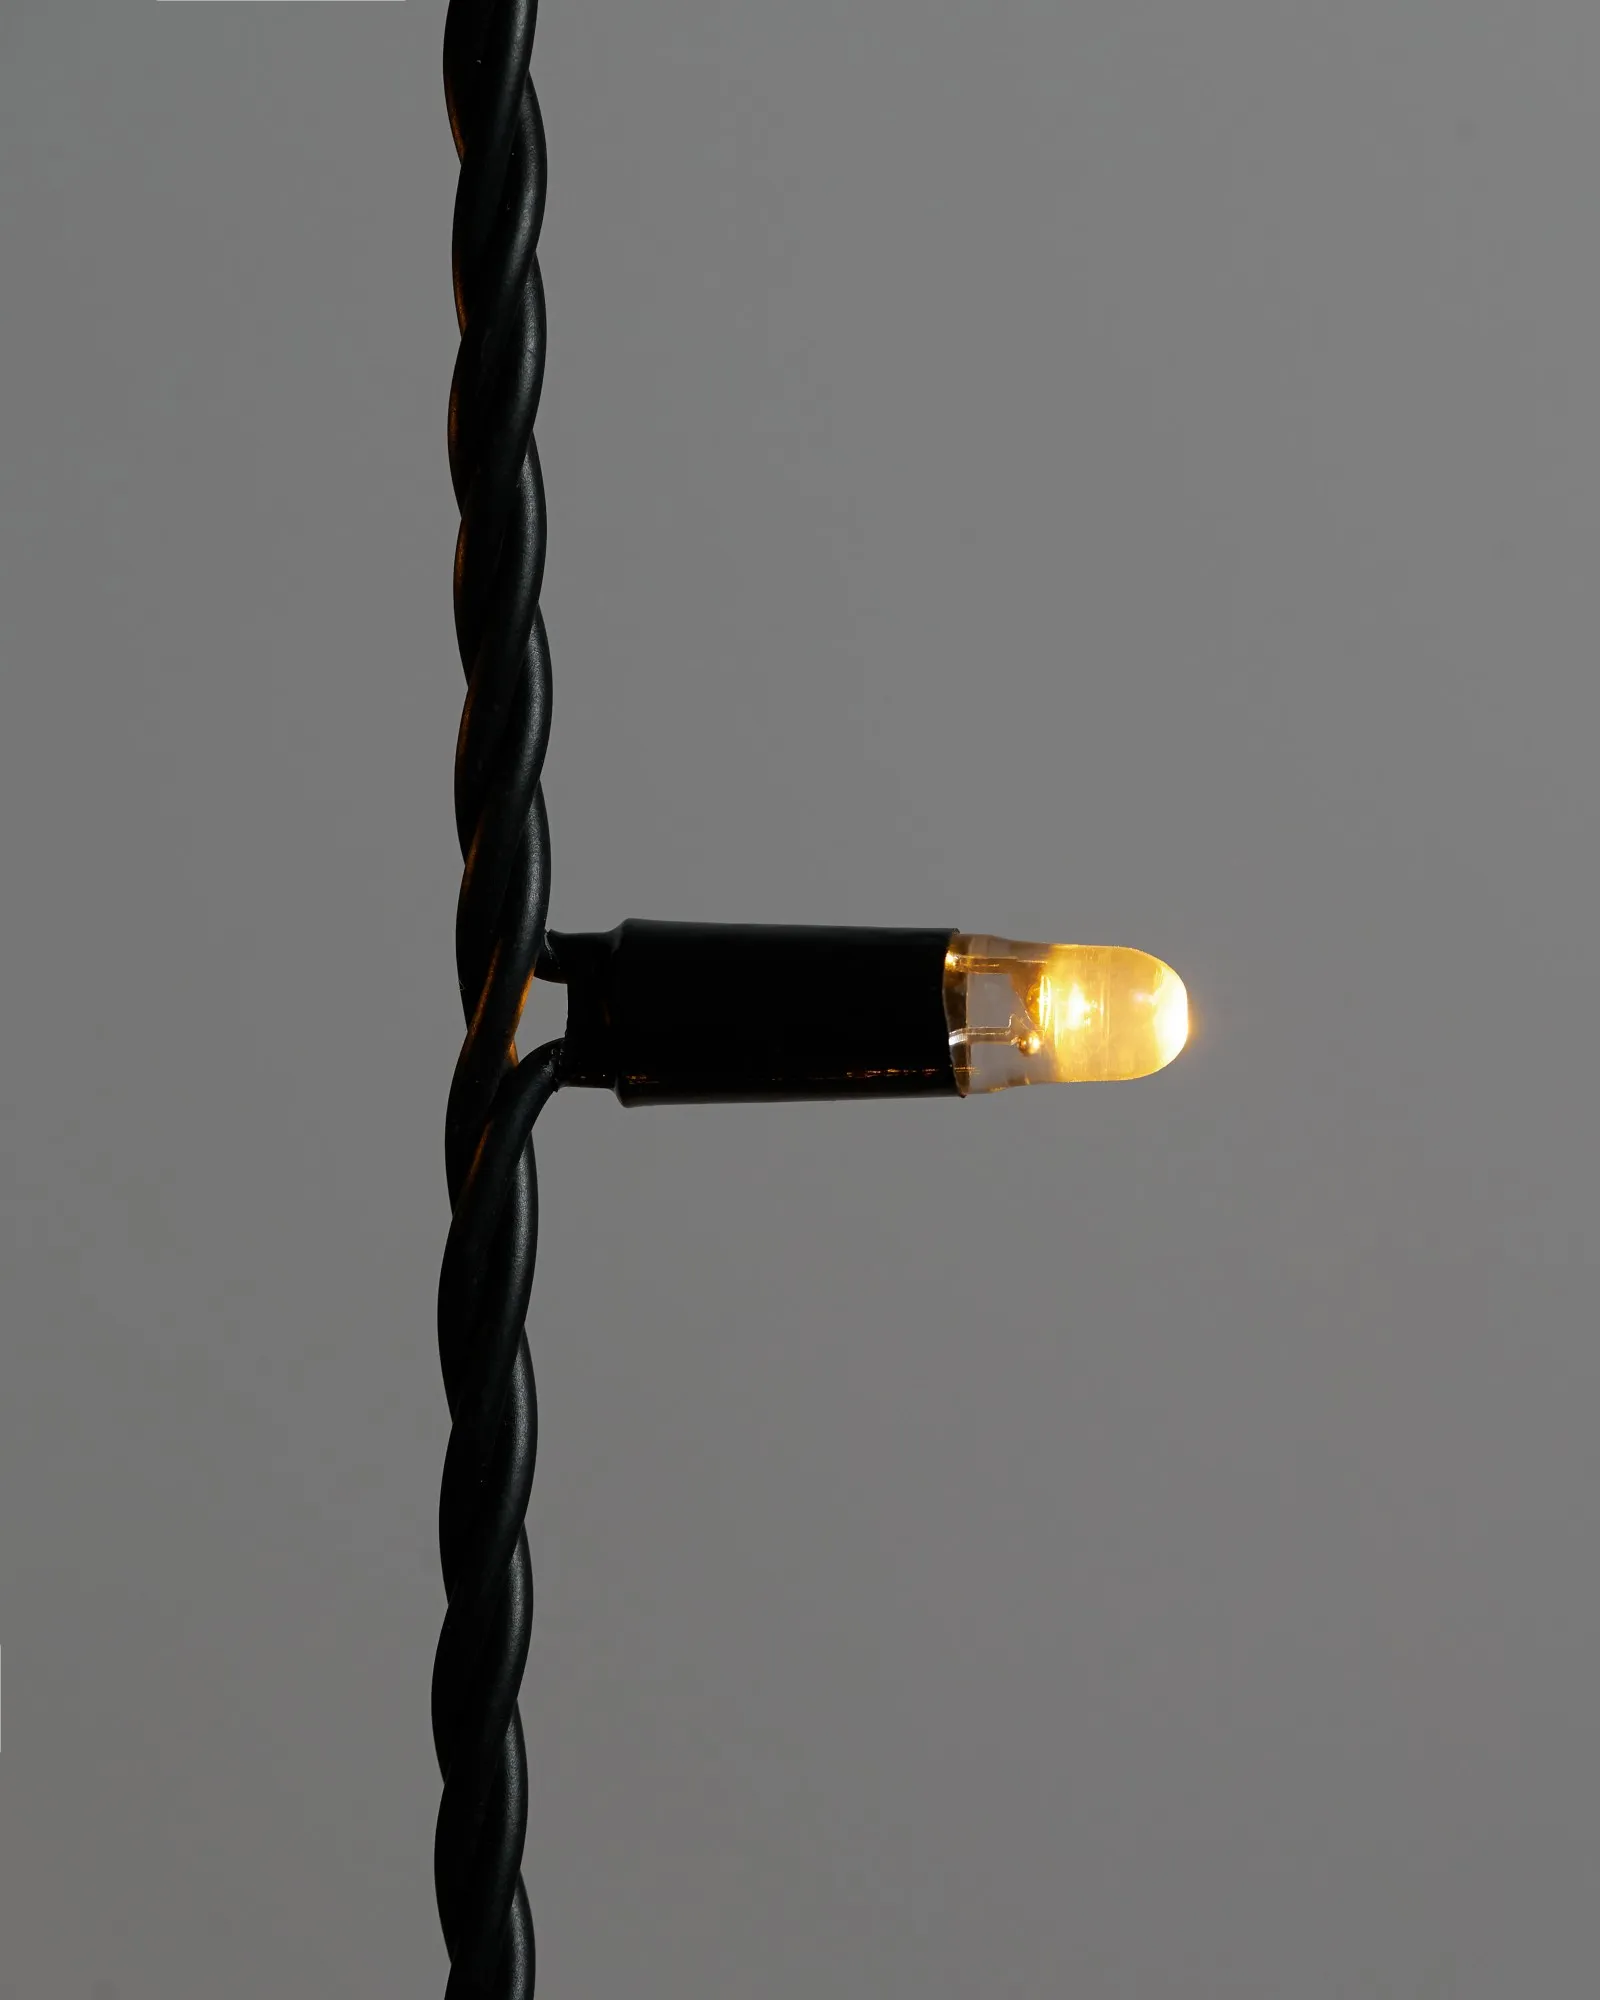 Гирлянда Занавес INOXHUB 2х6м, мерцающий, 600 LED, 220В, IP65, черная резина 2.3мм, ТЁПЛЫЙ БЕЛЫЙ фото Иноксхаб